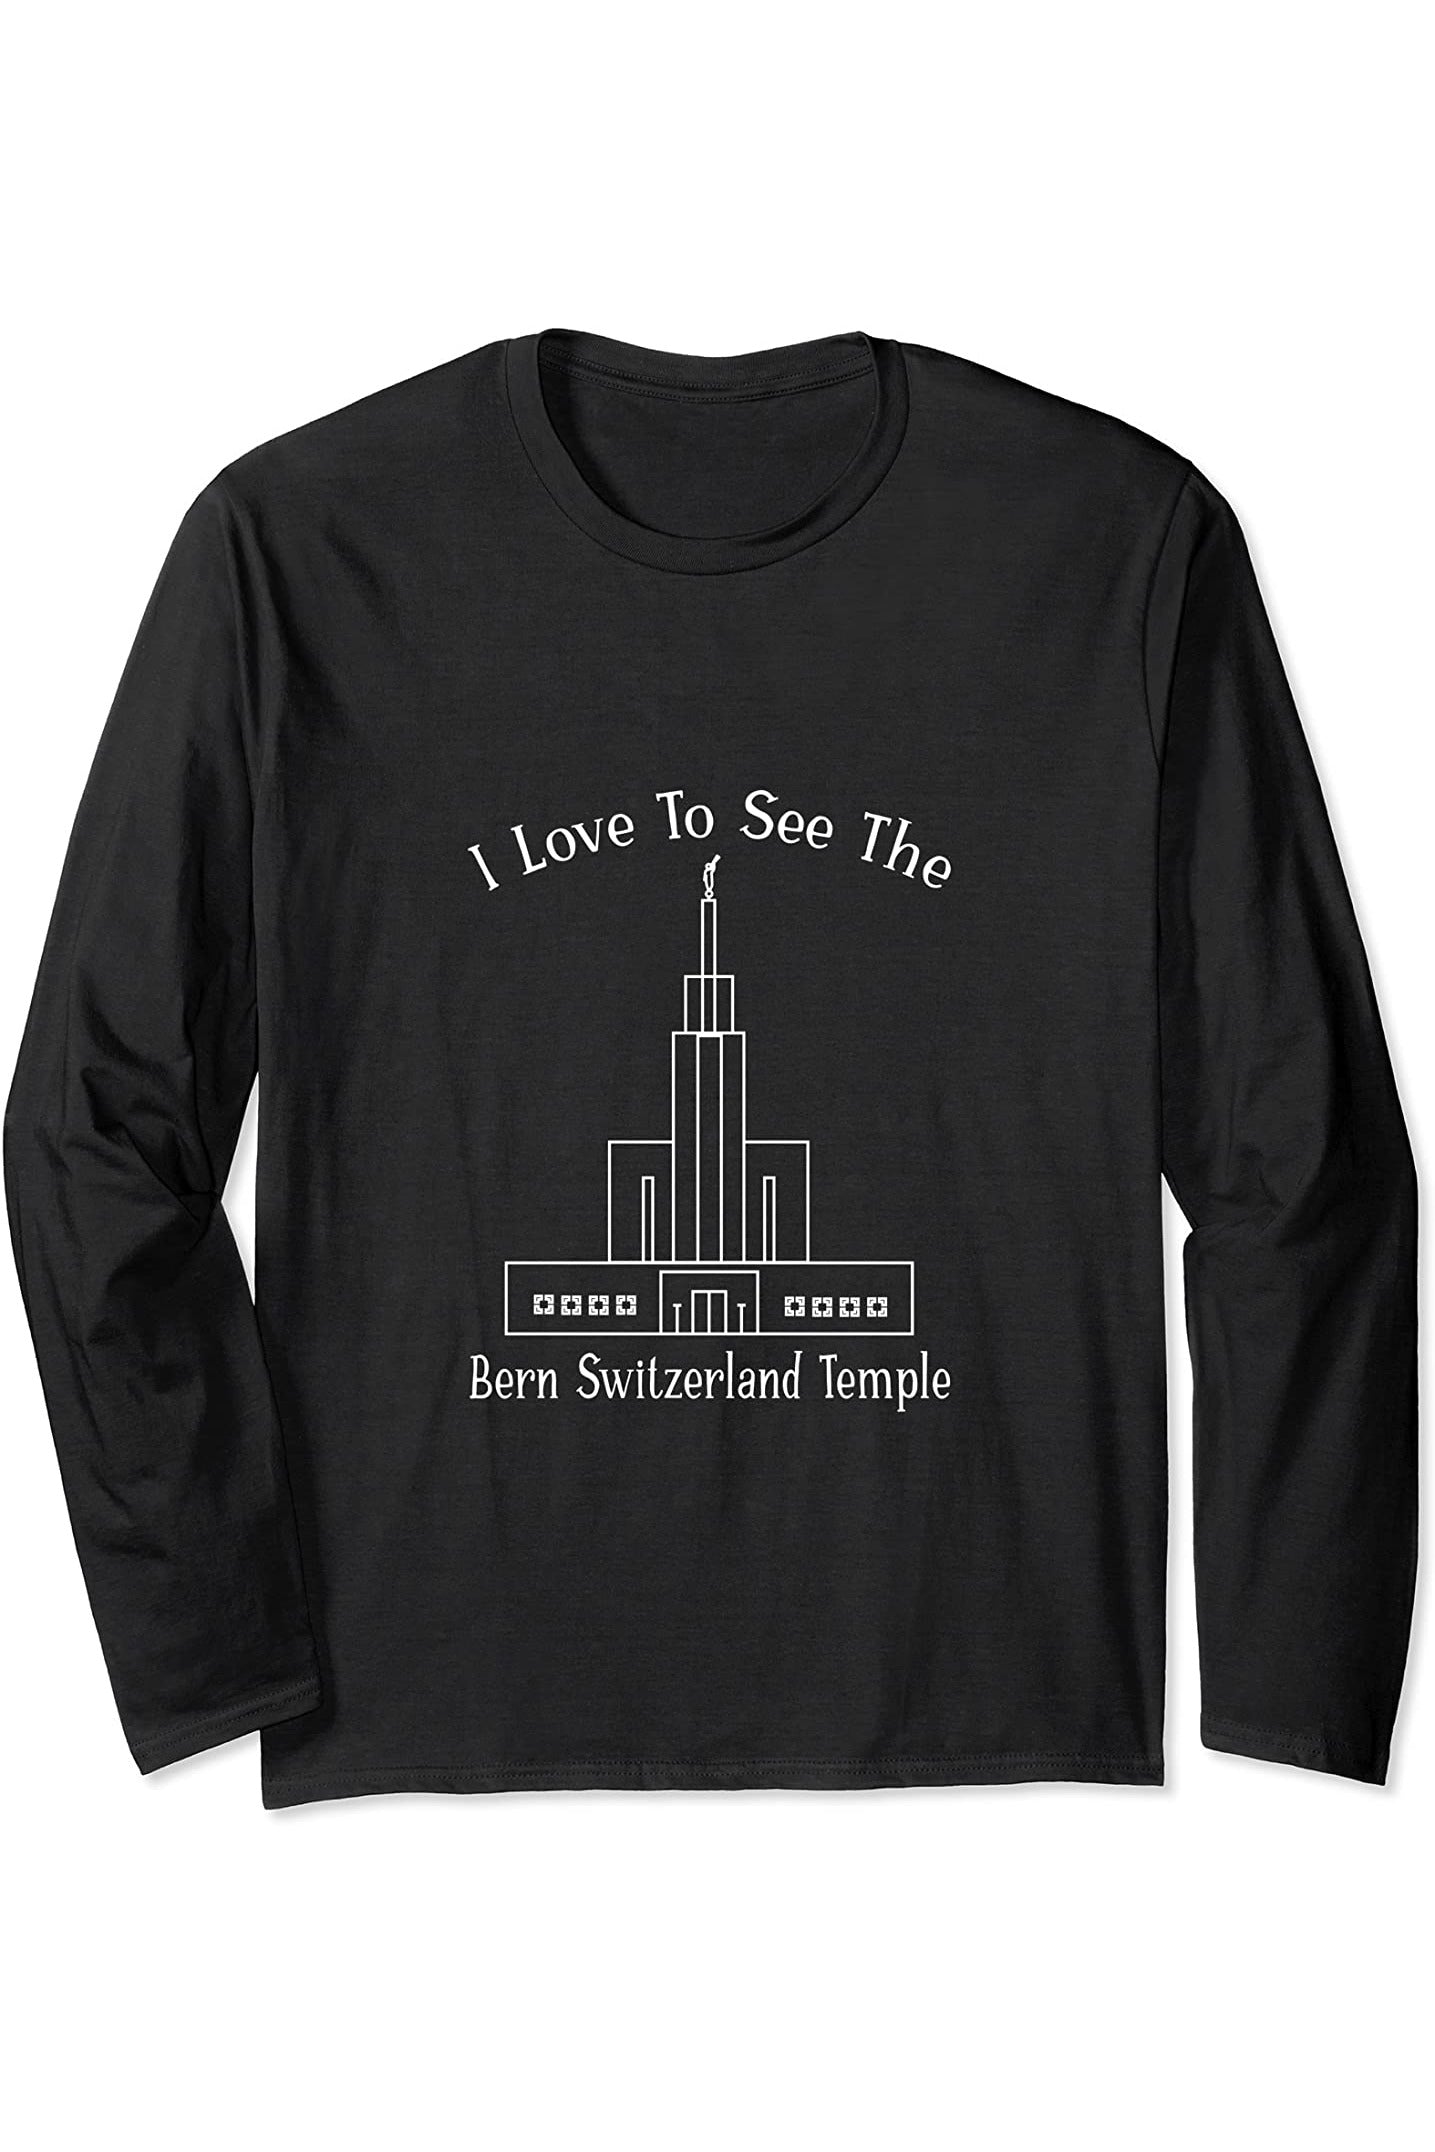 Bern Switzerland Temple Long Sleeve T-Shirt - Happy Style (English) US